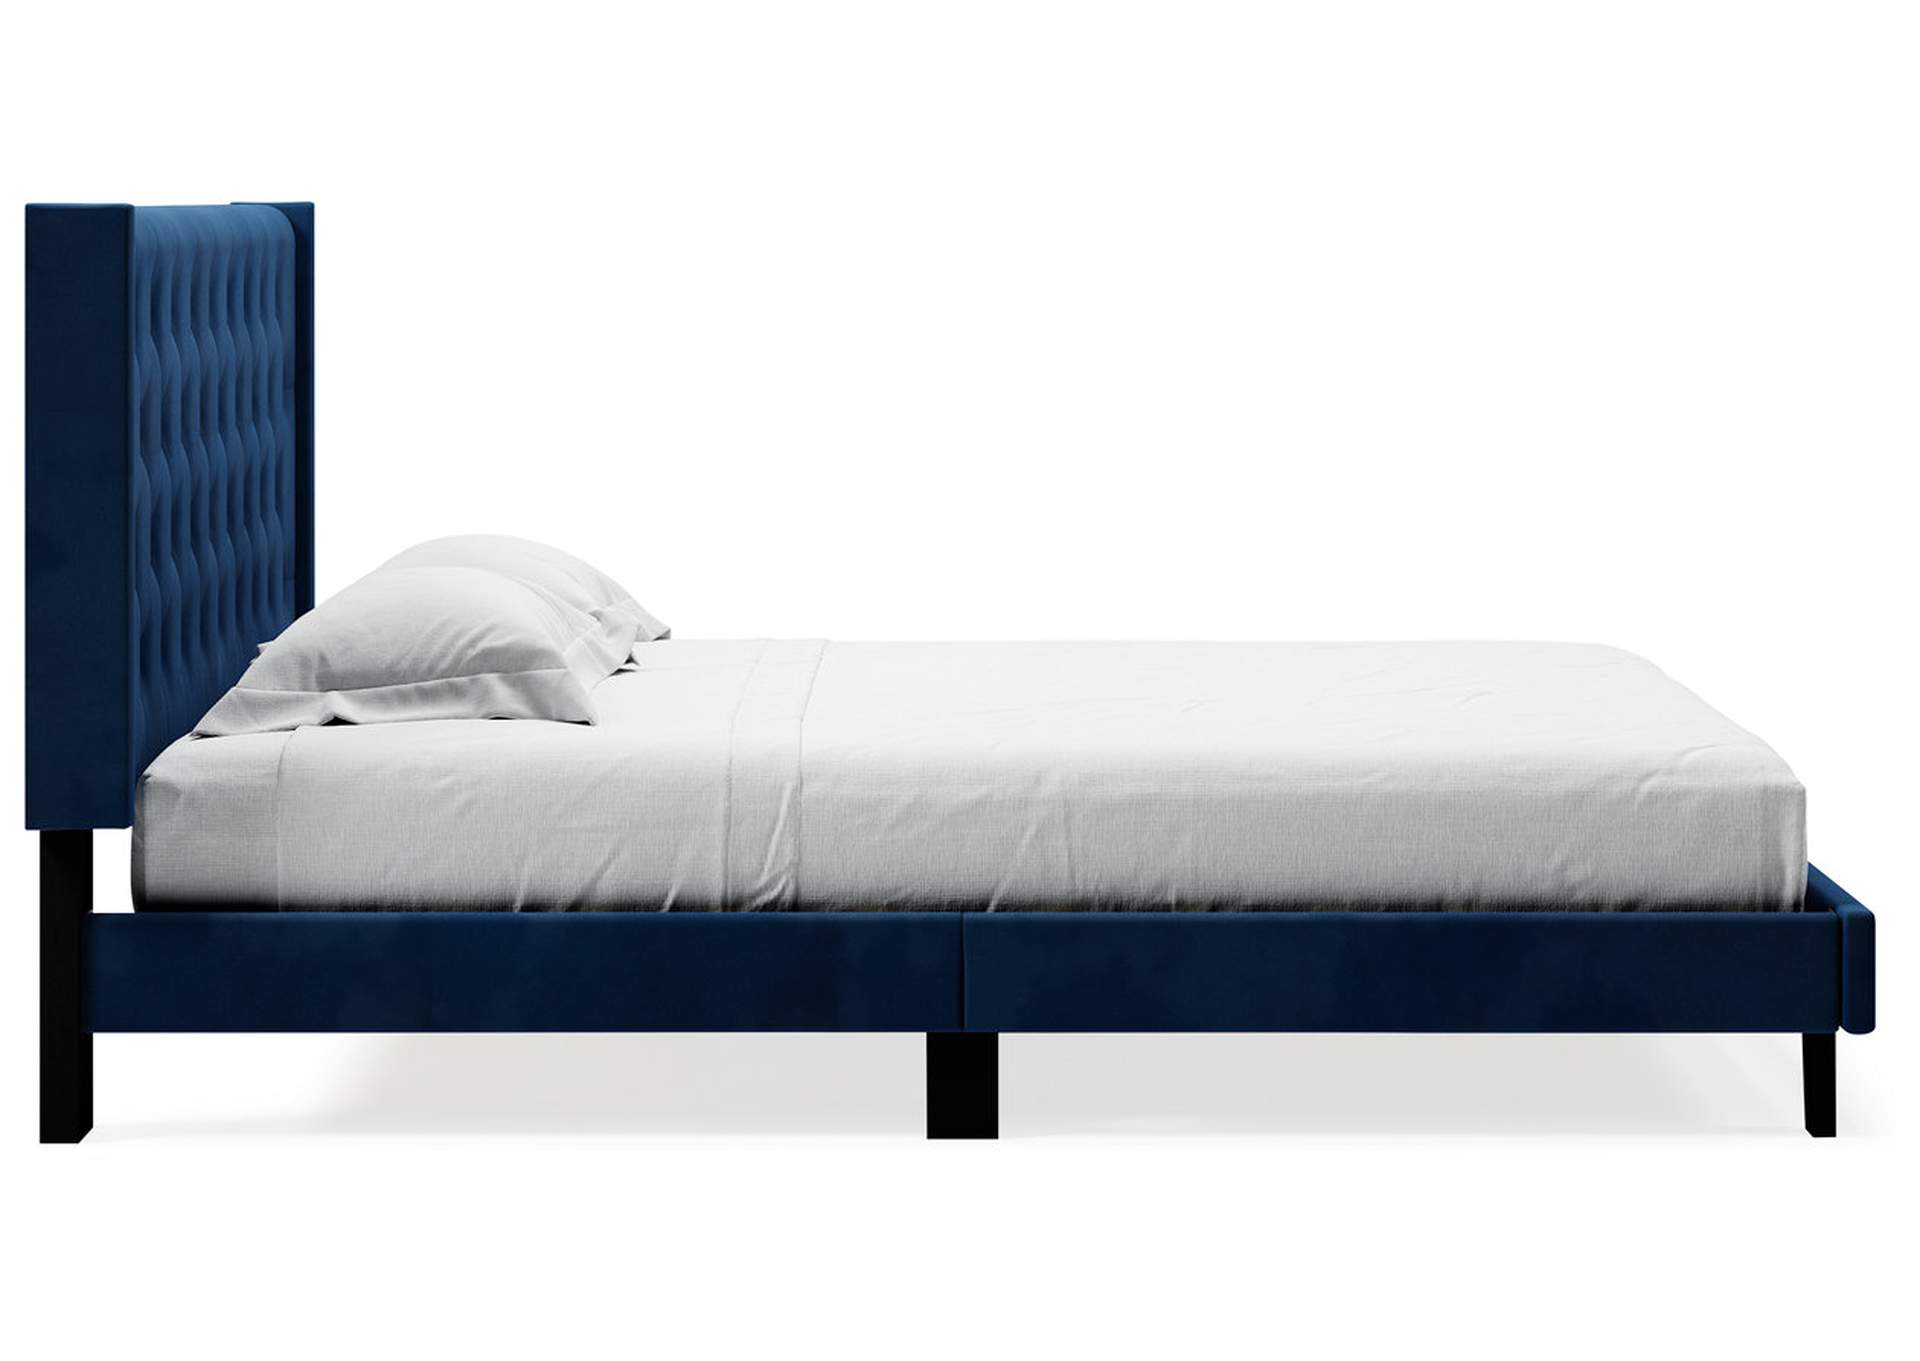 Vintasso King Upholstered Bed,Signature Design By Ashley